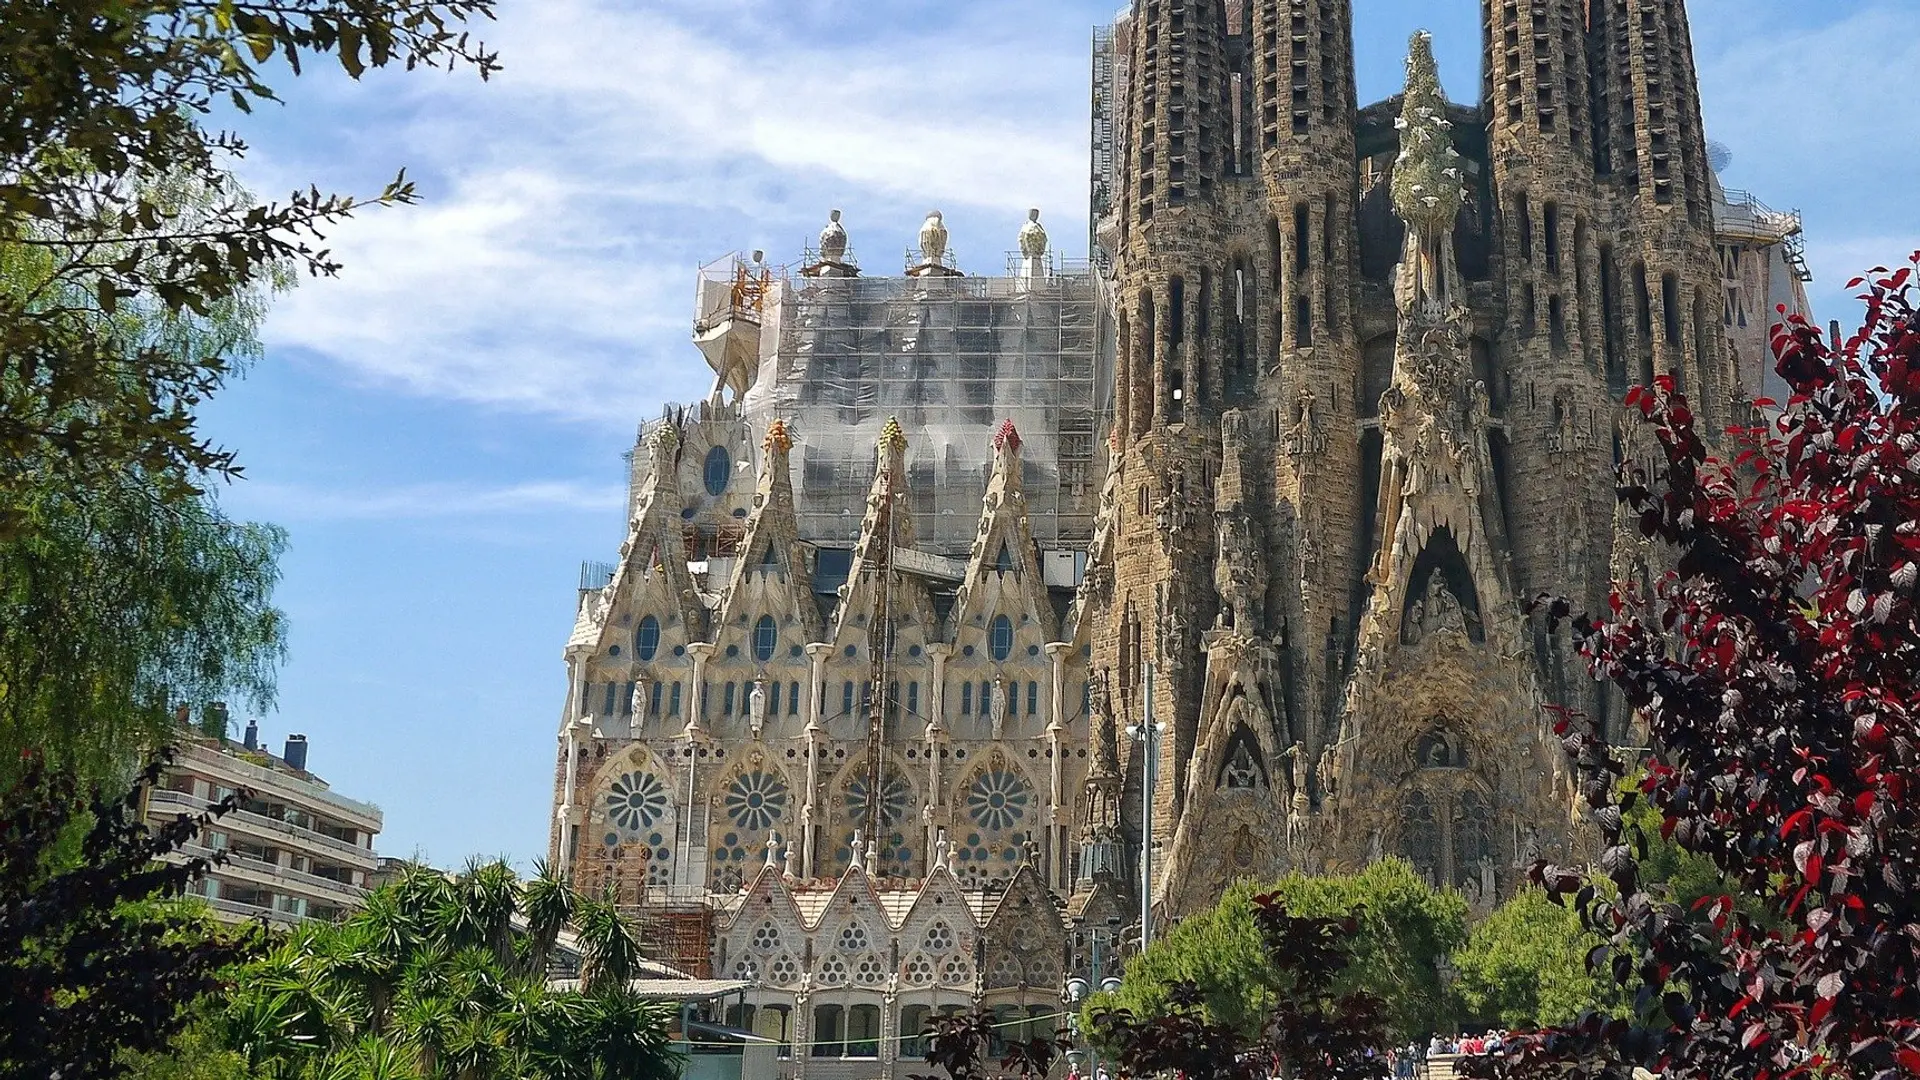 Insane detail and spectactular building The Sagrada Familia.